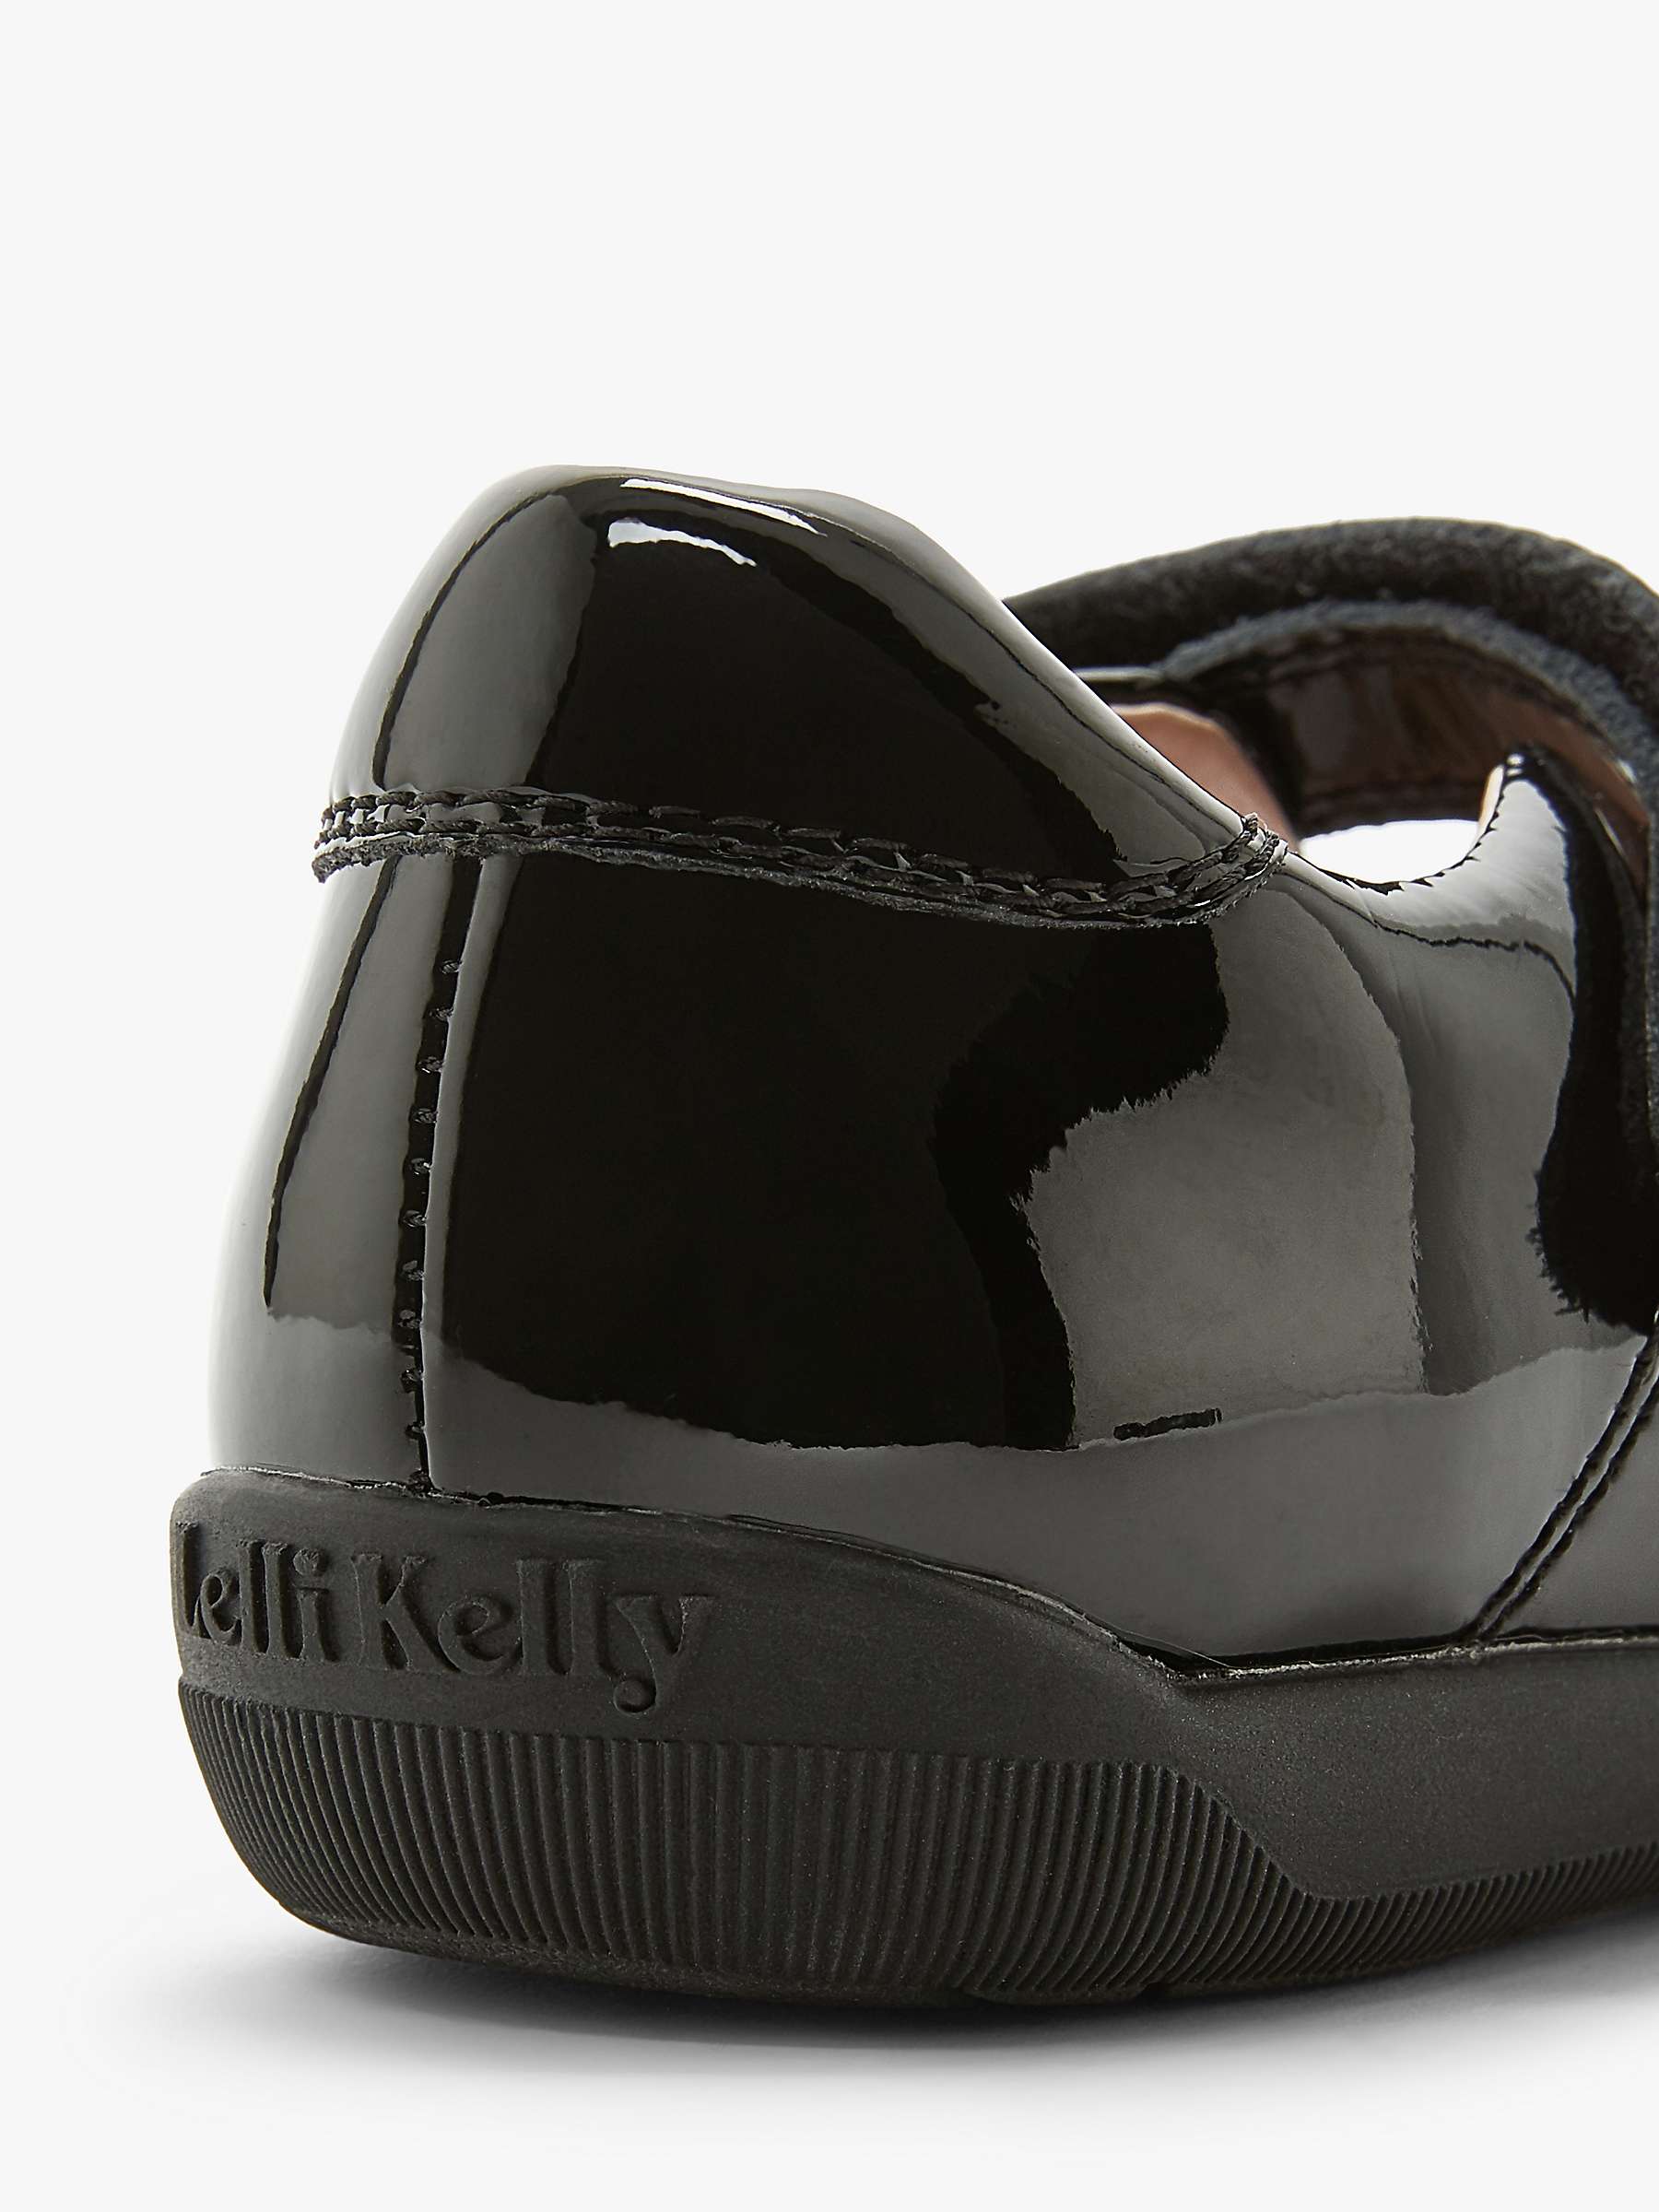 Buy Lelli Kelly Children's Elsa Leather School Shoes, Black Patent Online at johnlewis.com